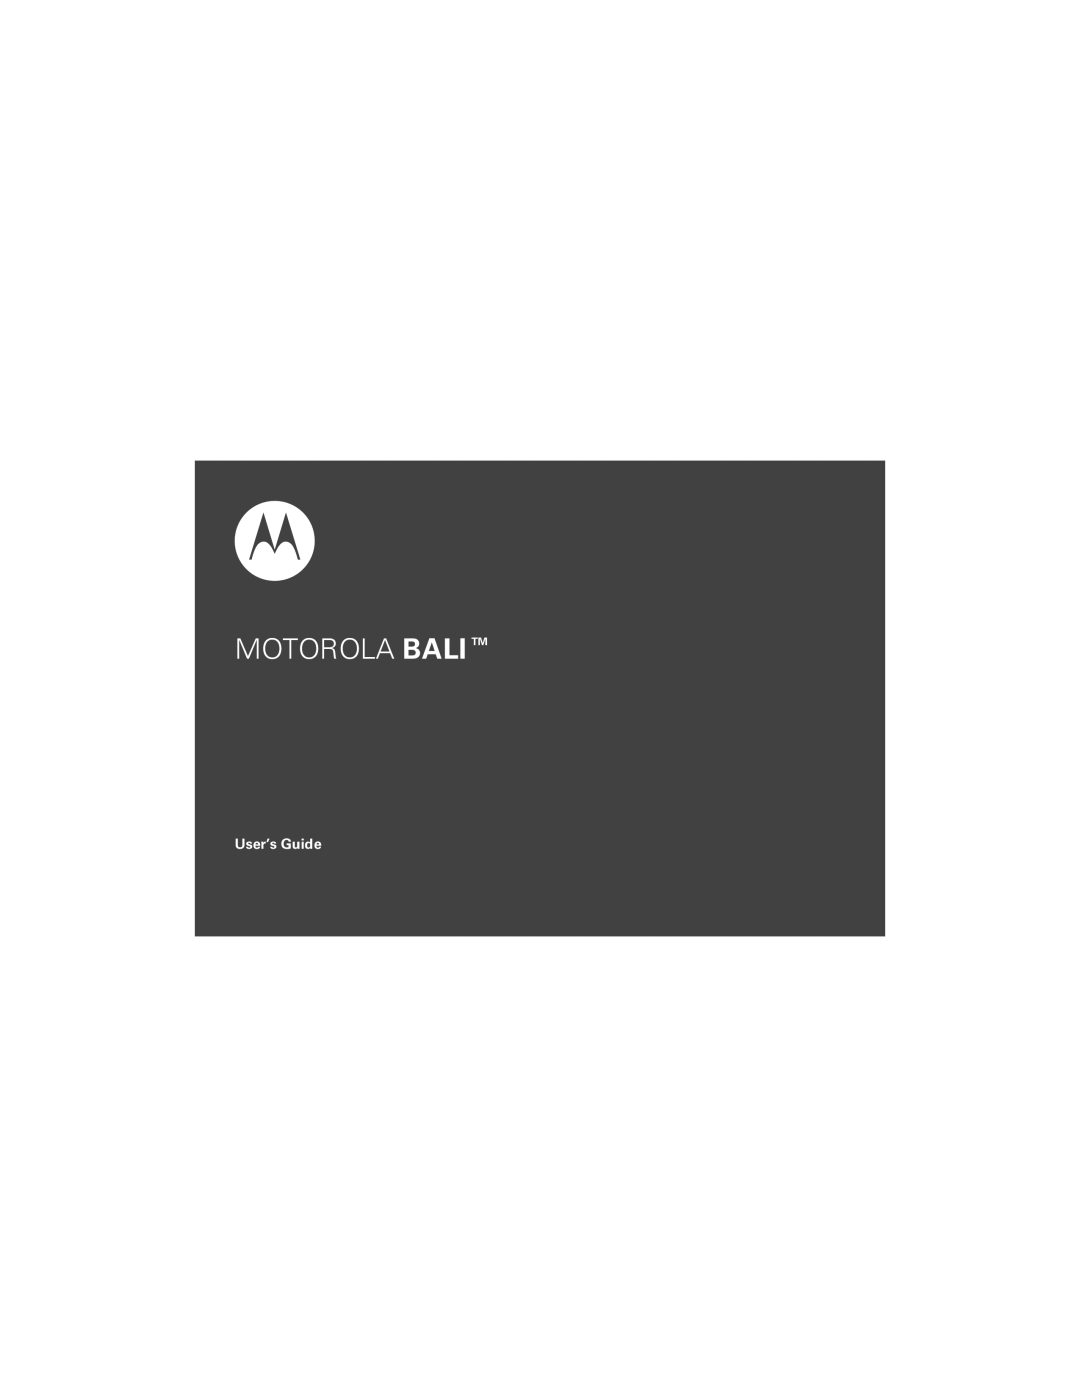 Motorola BALI, NNTN8041A manual Motorola Bali Tm, User’s Guide 